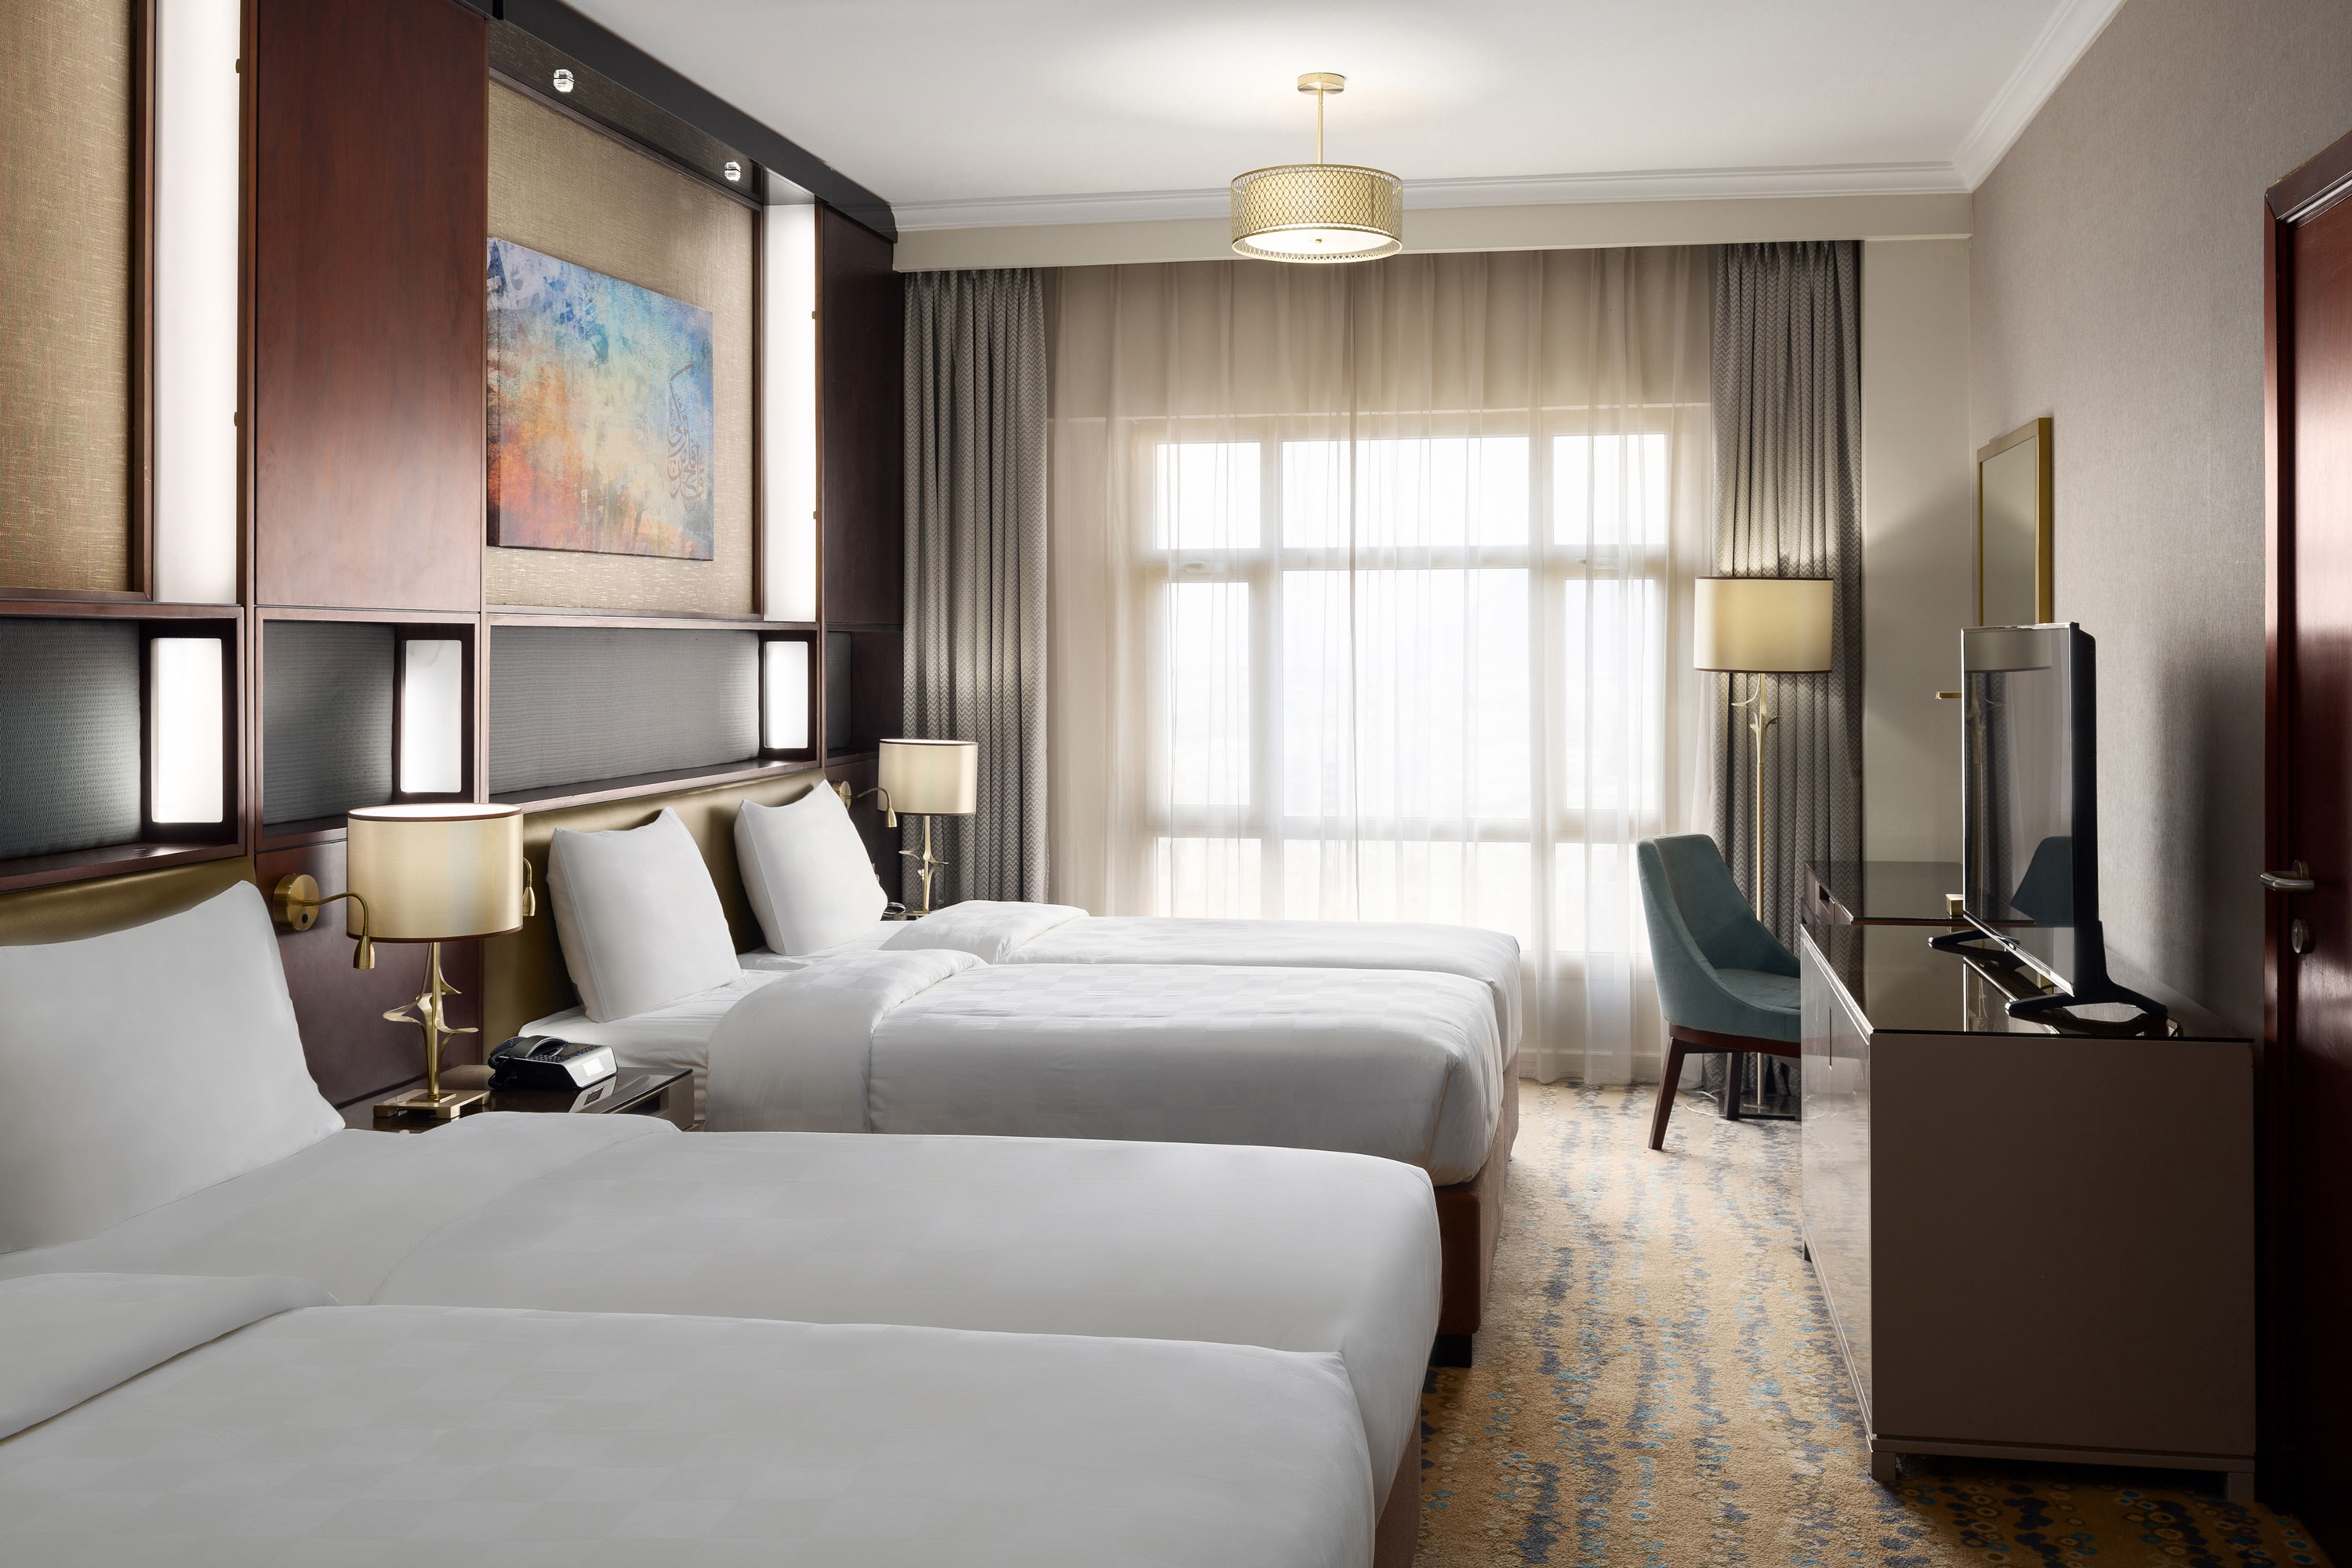 X Videos Sudiya Arb - Saja Al Madinah Hotel | Saudi Arabia â€“ Comfort in Every Visit